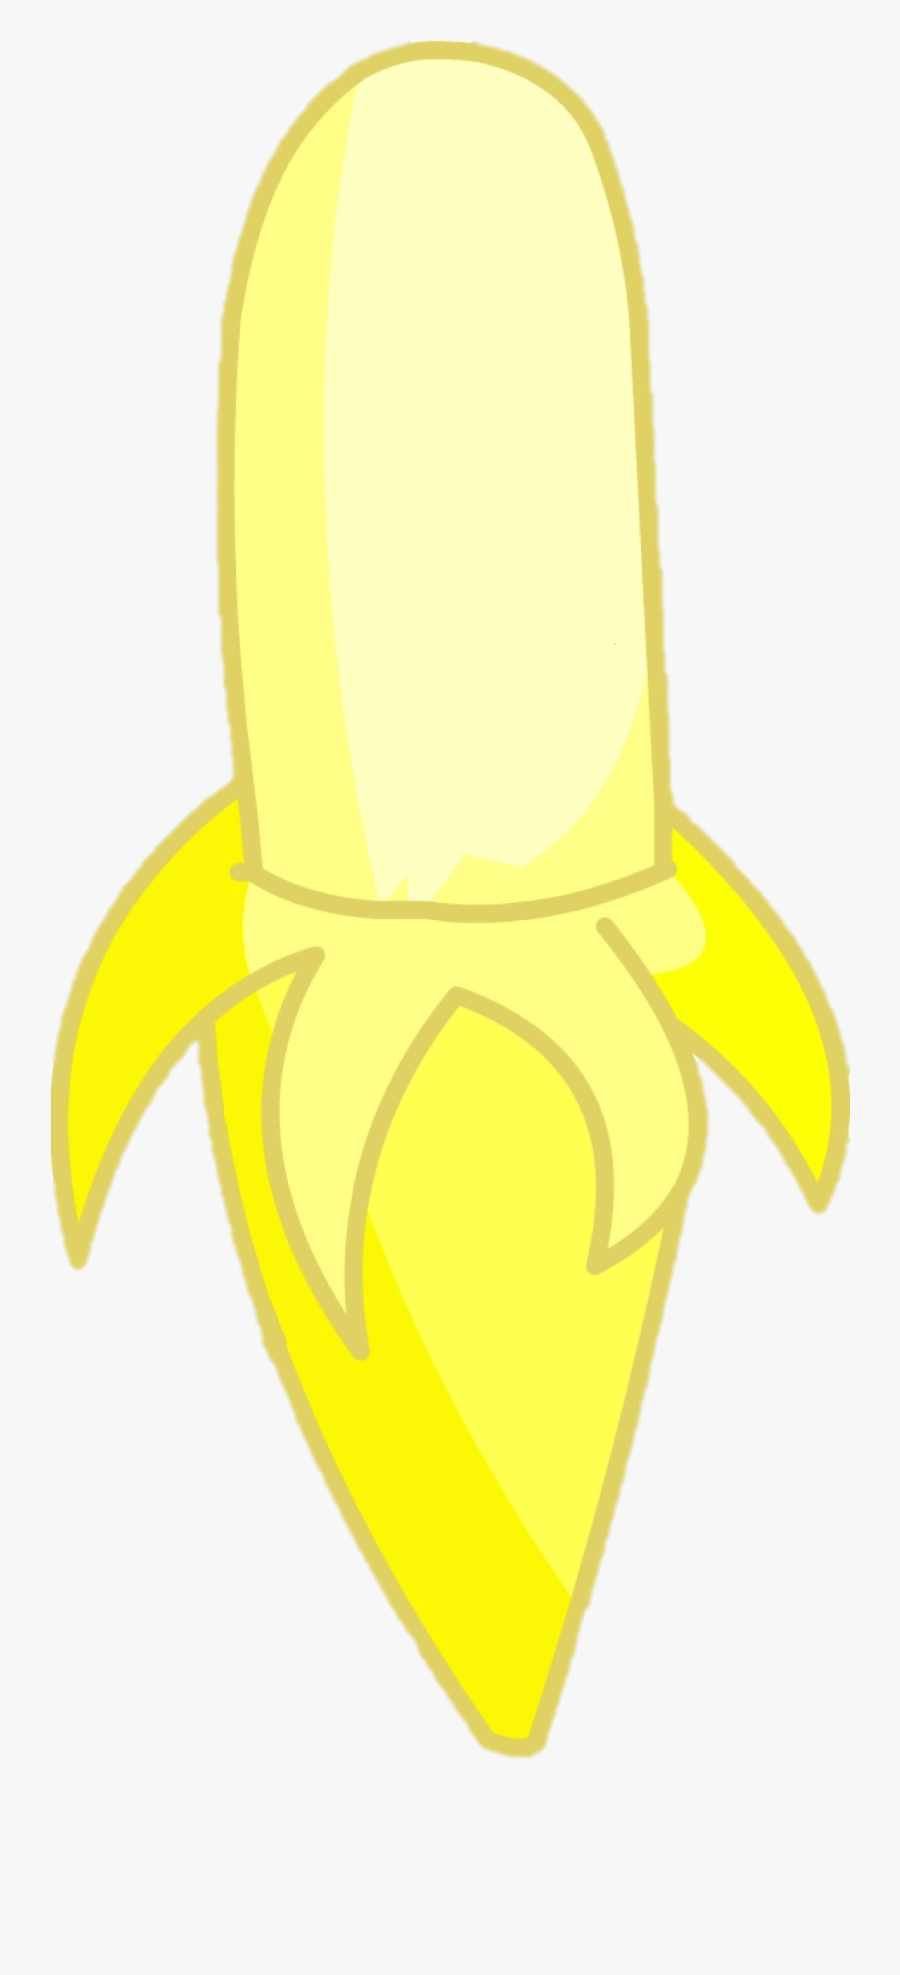 Hey Guys Look A Banana - Banana Bfdi, Transparent Clipart